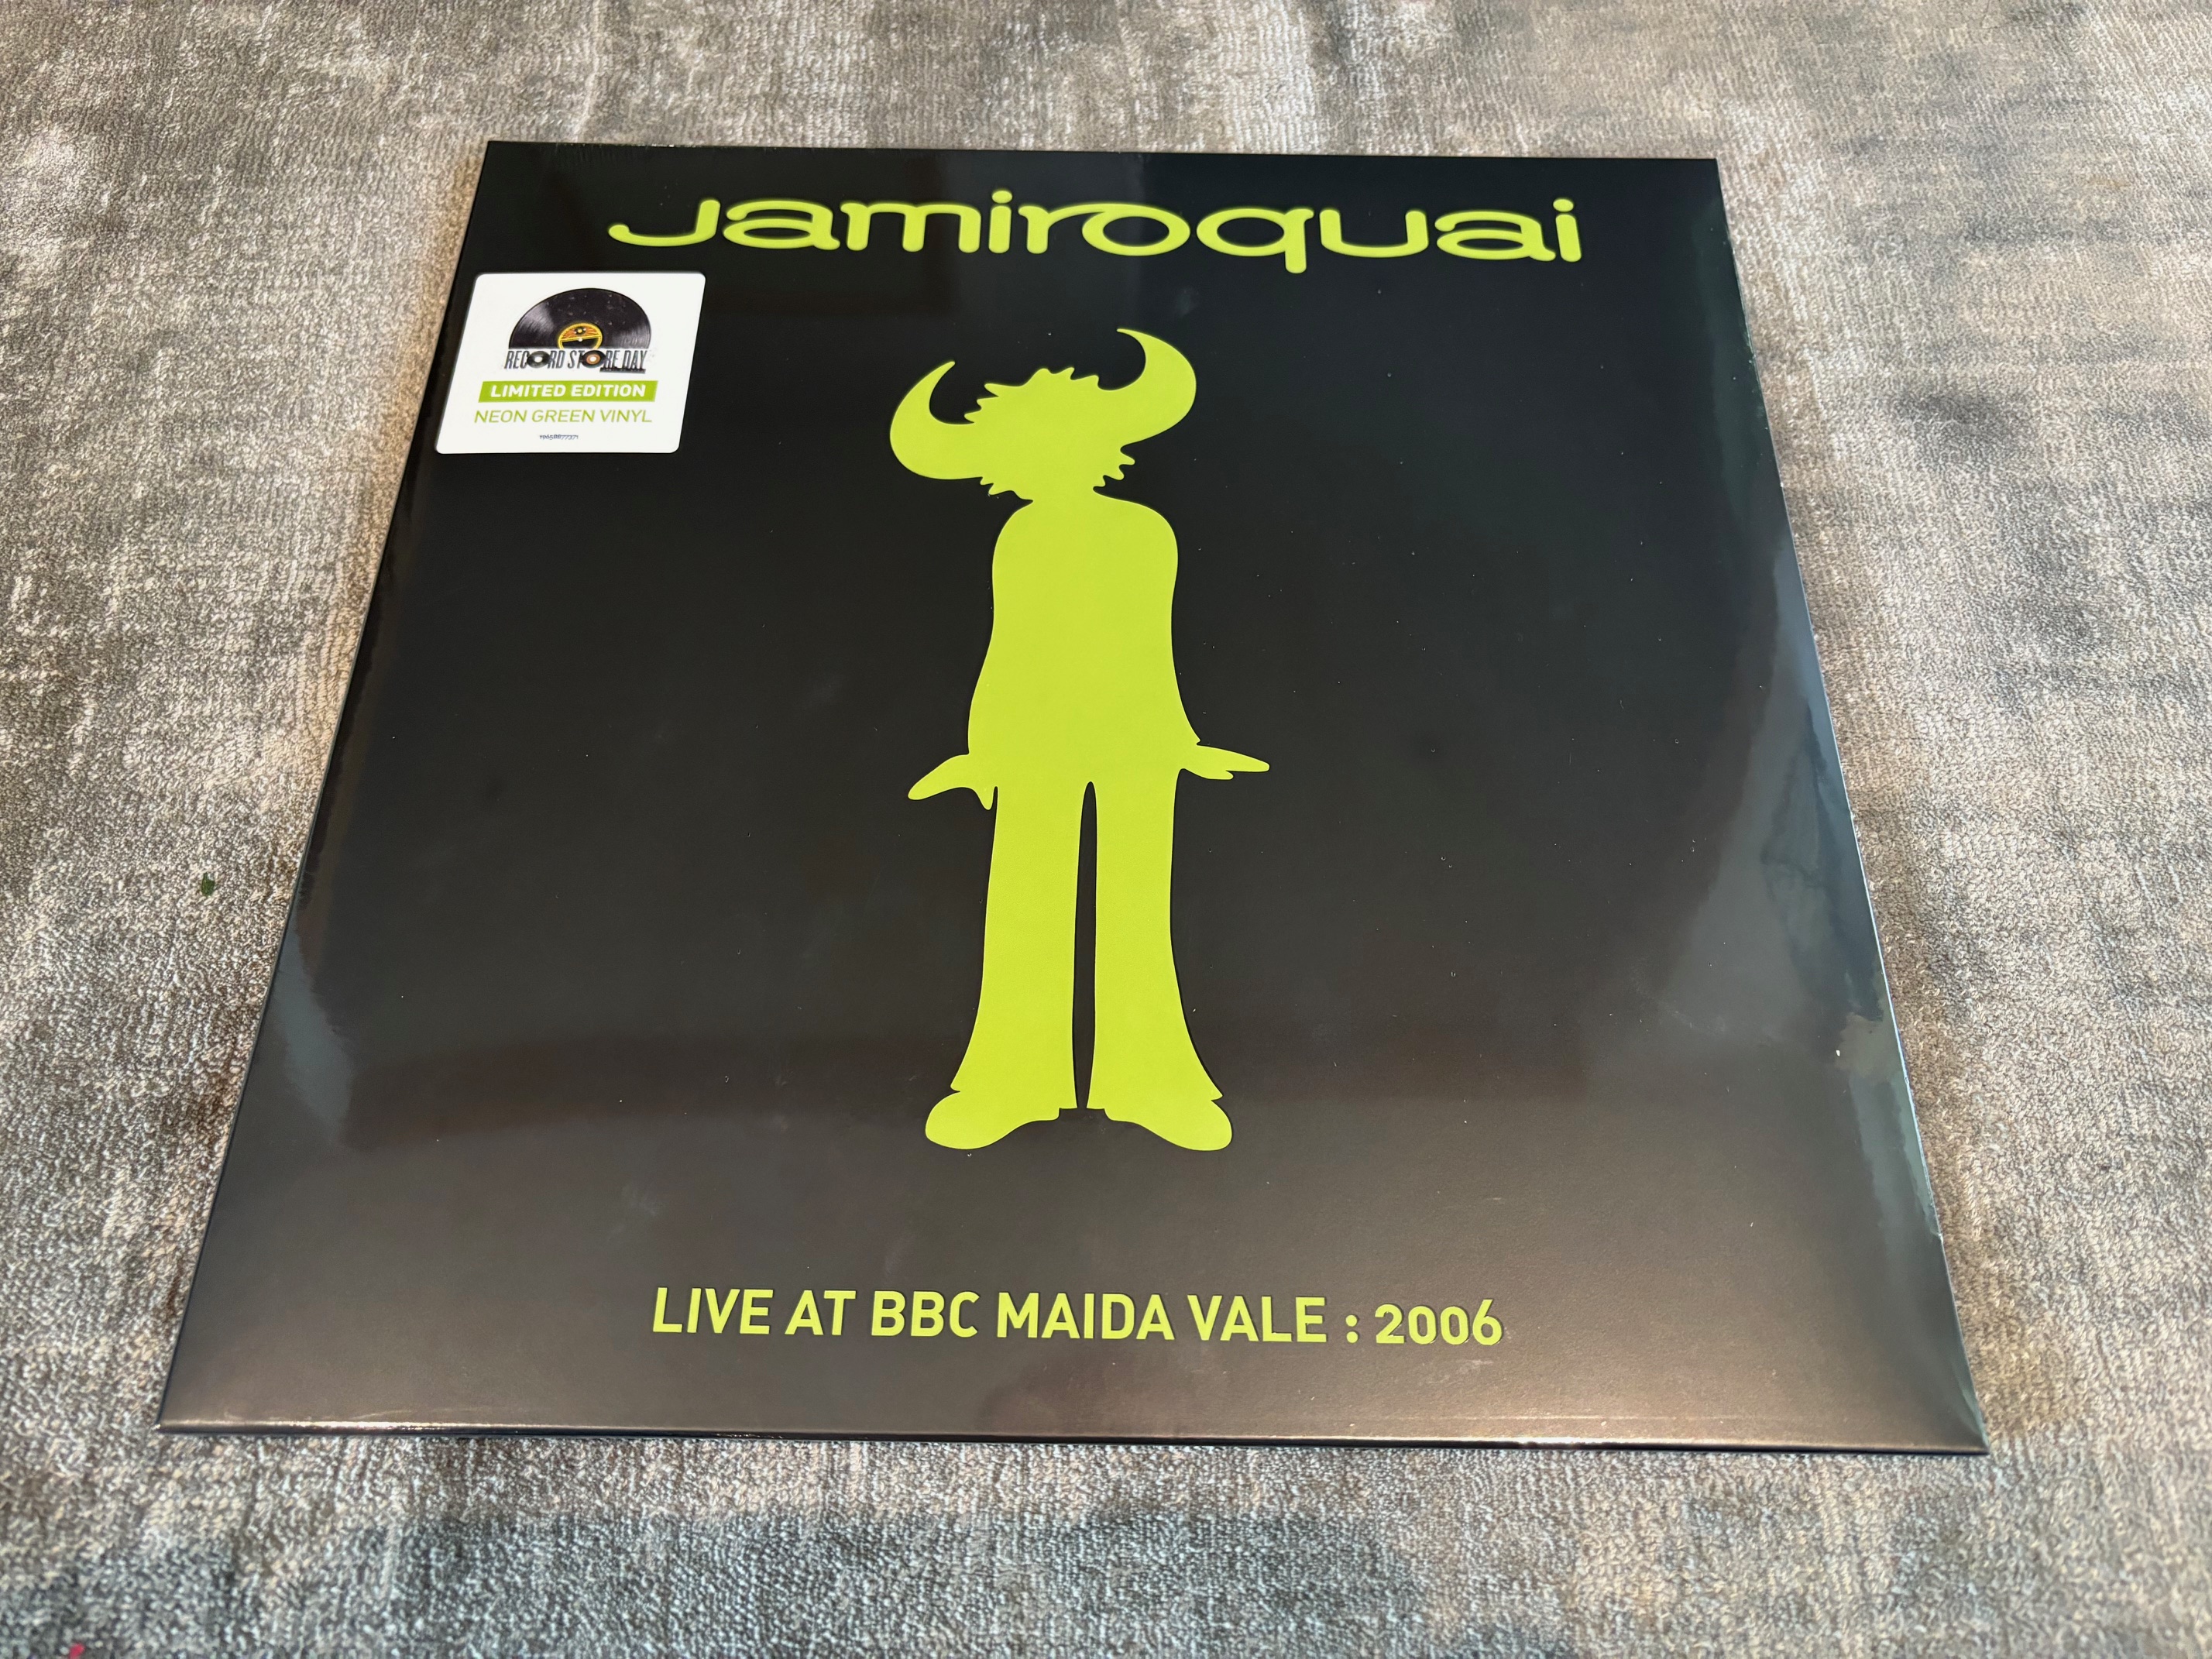  Live at BBC Maida Vale: 2006 (NEON GREEN Vinyl)